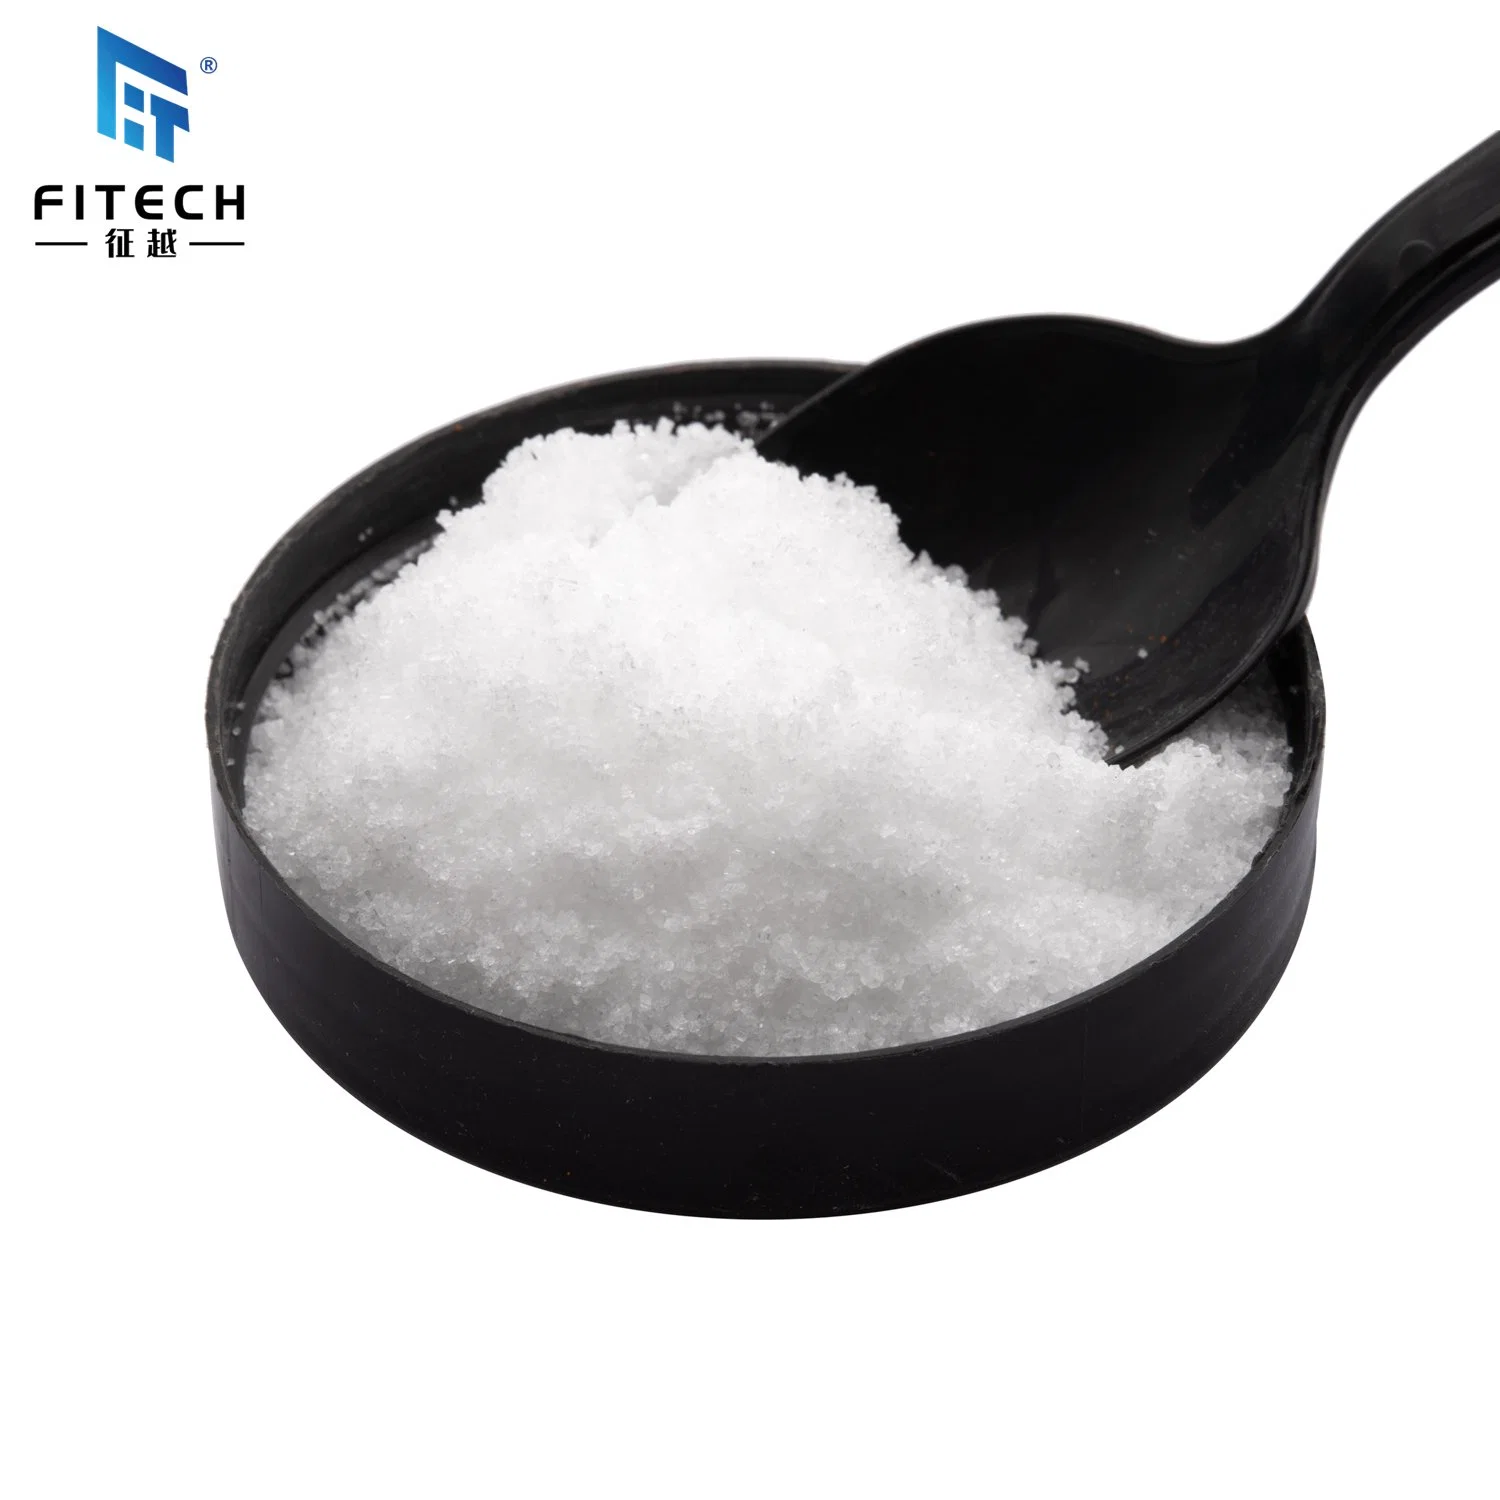 Haute pureté 99,9% Utilisé comme catalyseur Sulfate de césium cristallin blanc